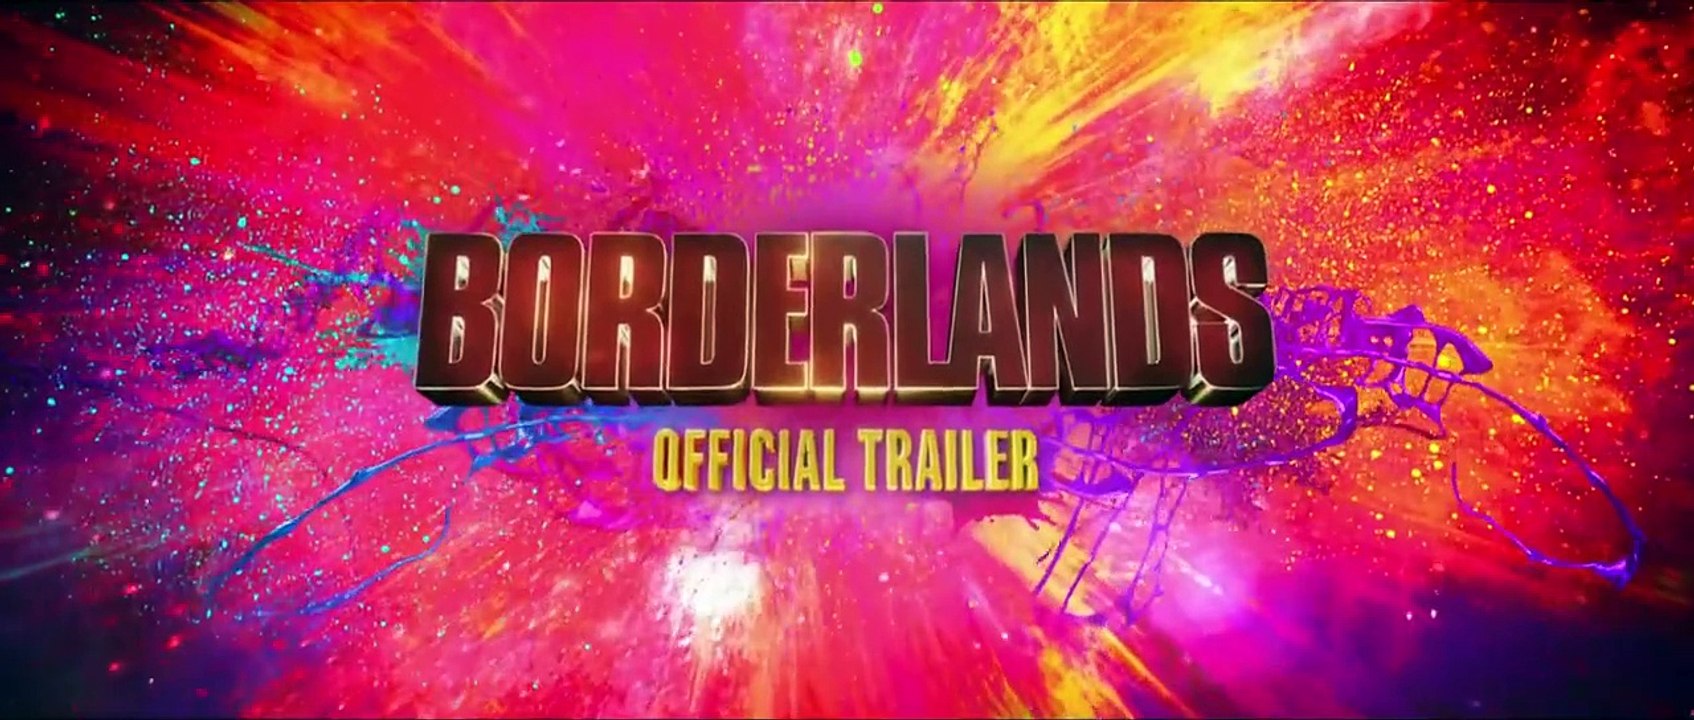 Borderlands Trailer OV